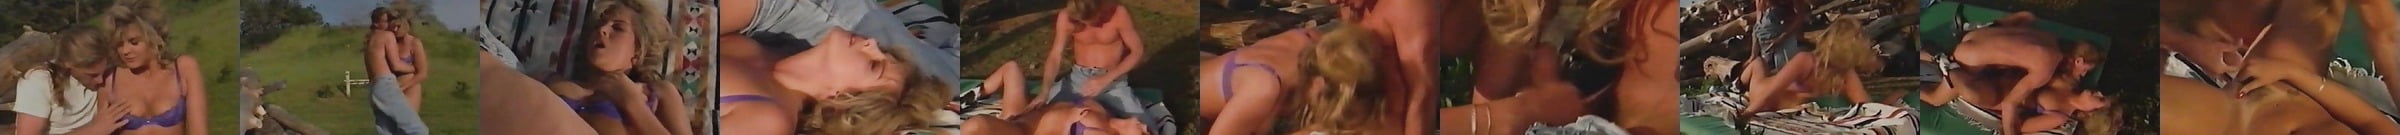 Debi Diamond Randy West Free Vintage Porn 8c Xhamster